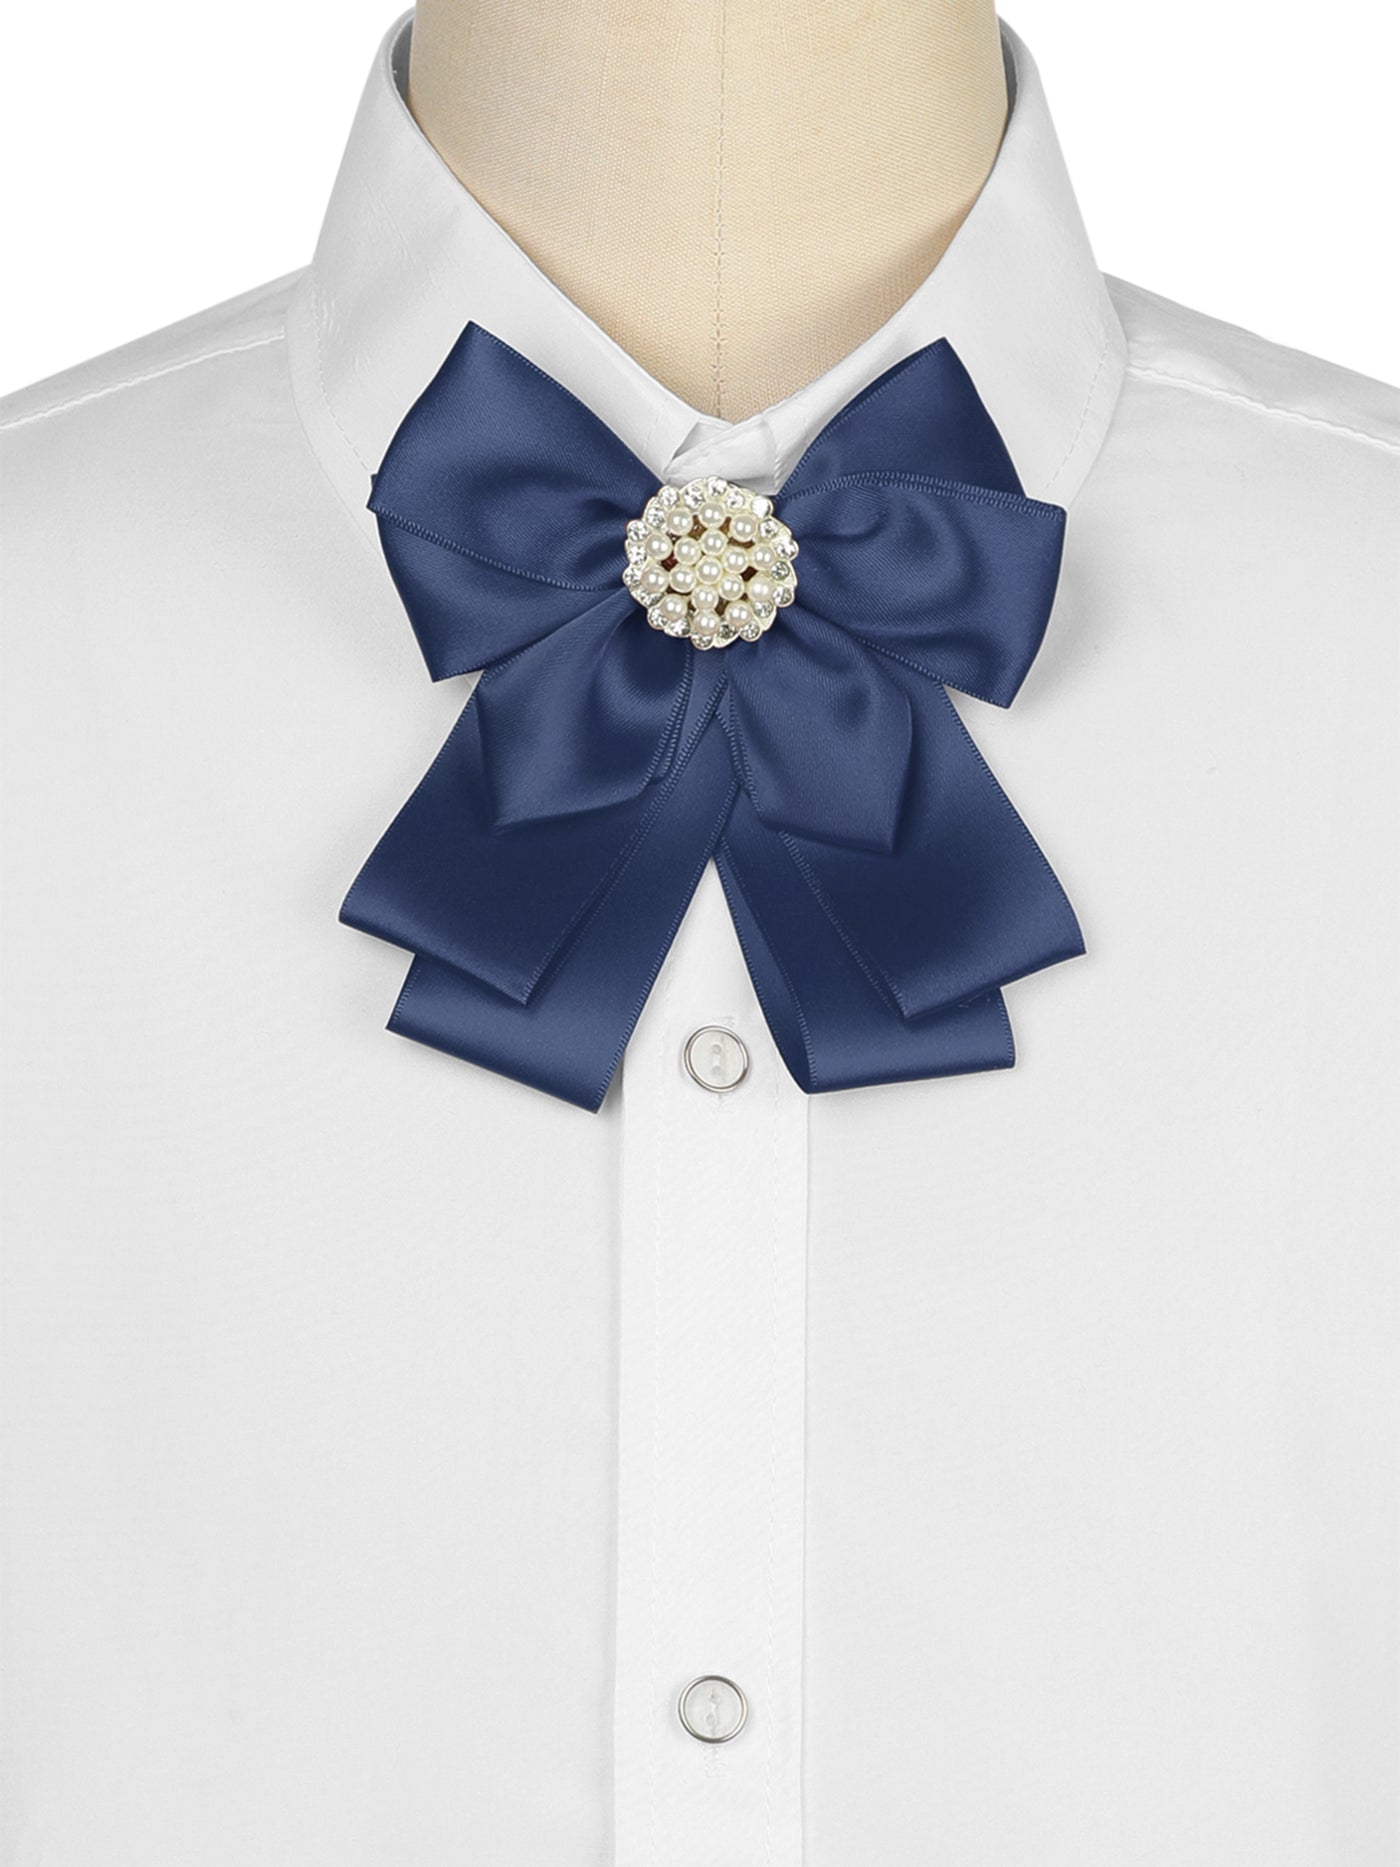 Bublédon Women's Ribbon Brooch Bowknot Necktie School Uniform Pin Collar Bow Tie with Pearl